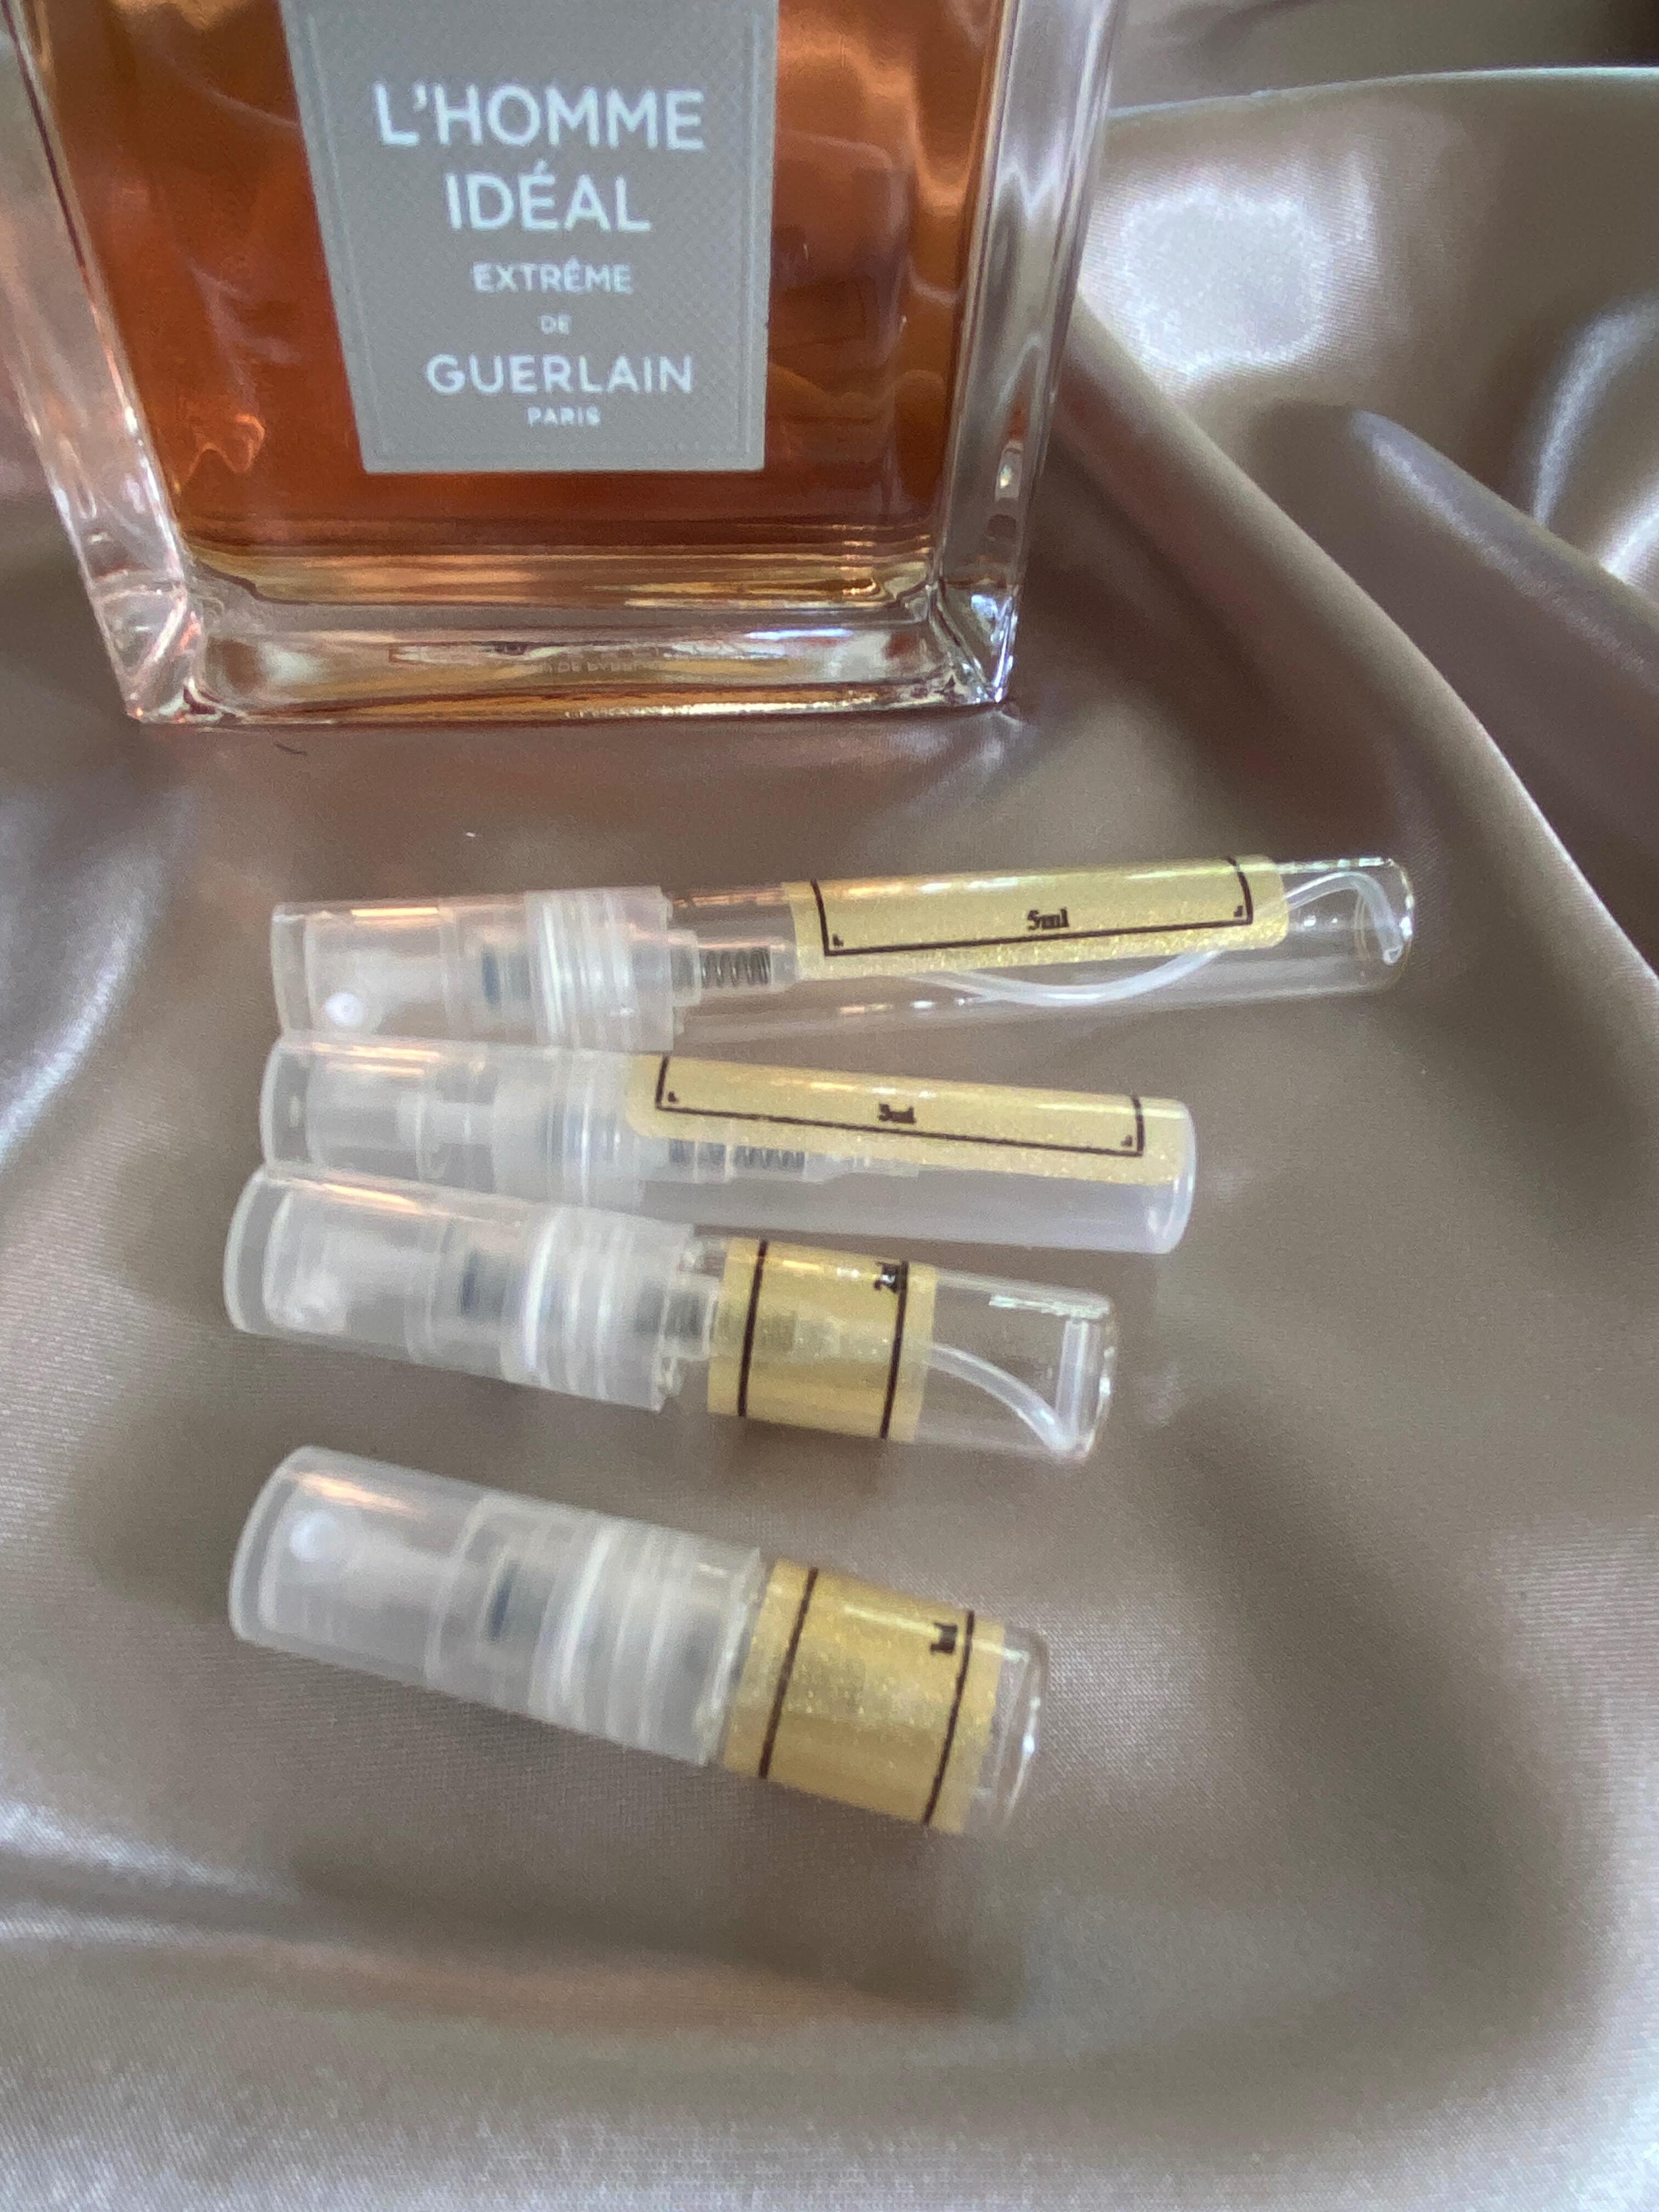 Guerlain - L'Homme Ideal Extreme - Fragrance Samples